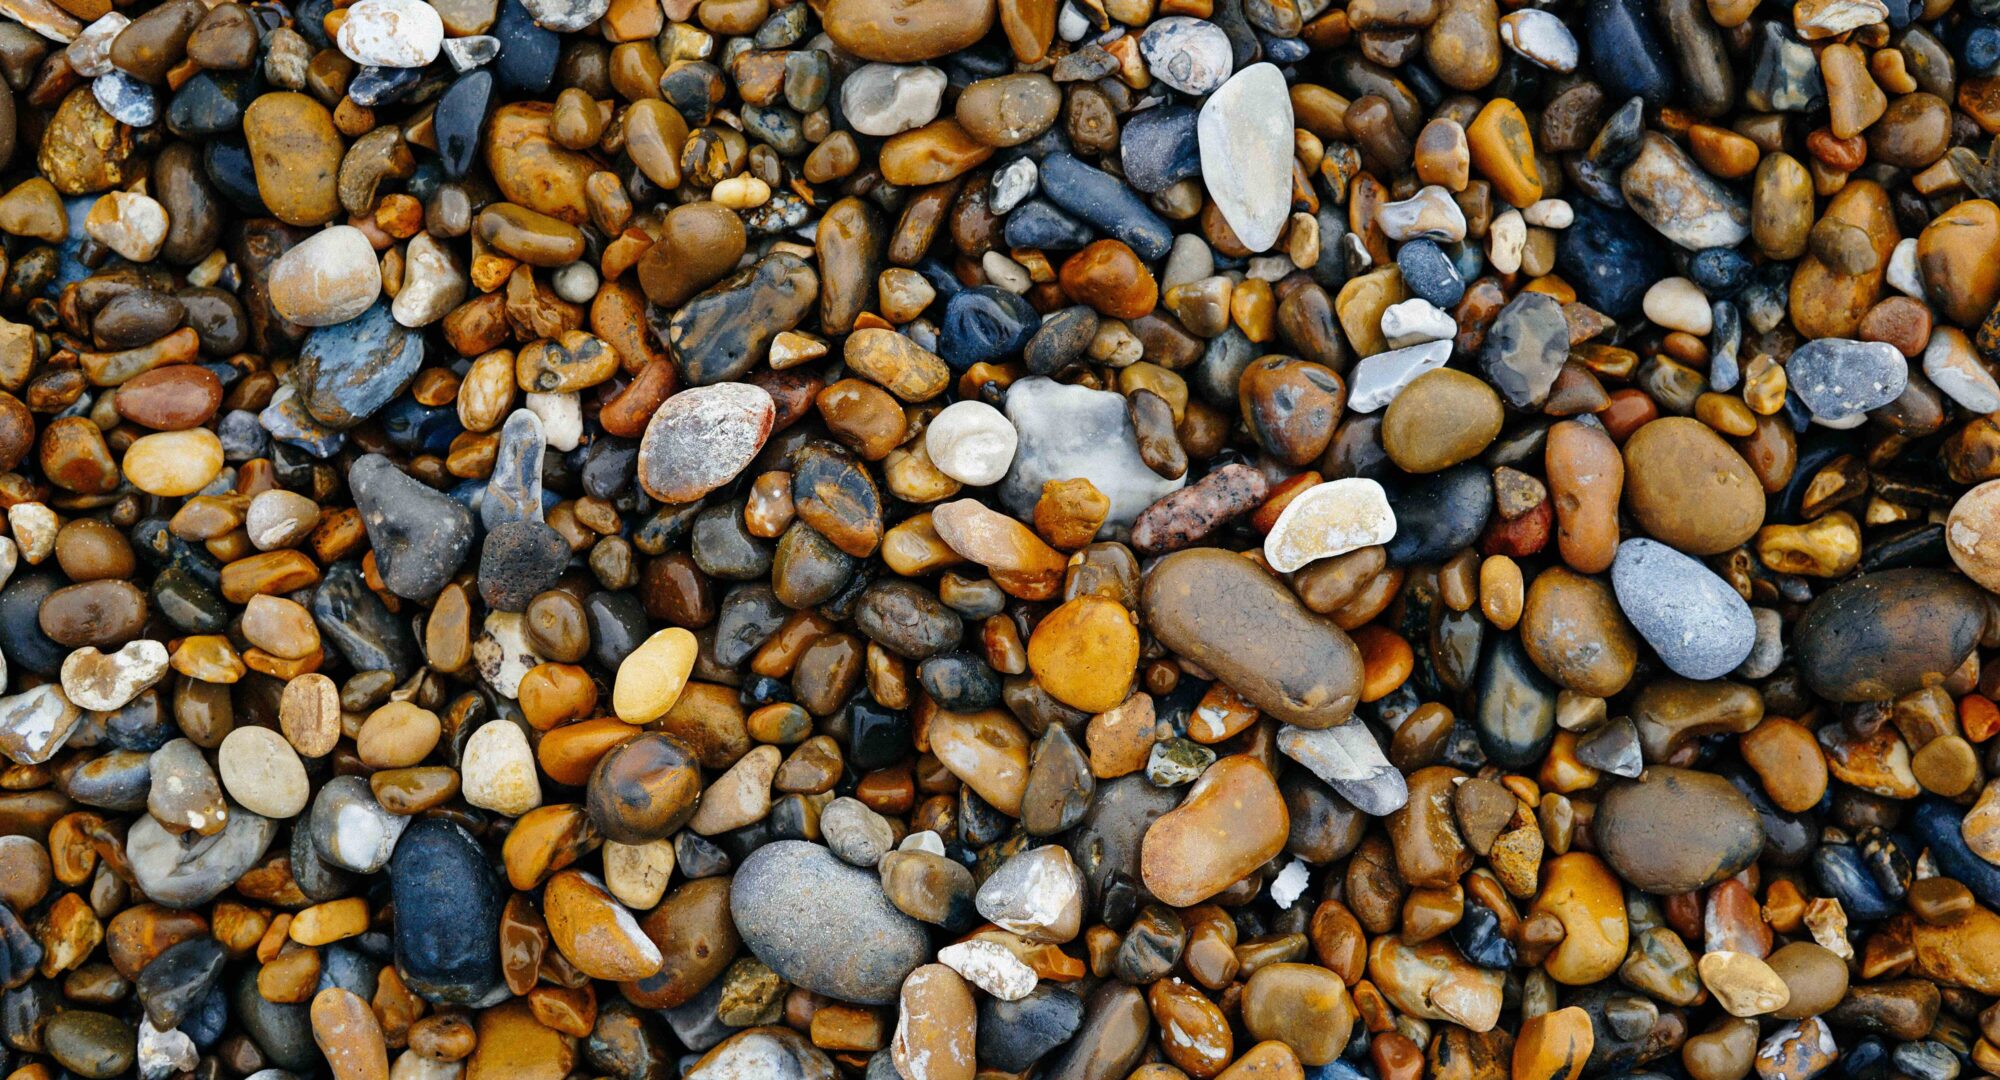 A close up of beach pebbles.